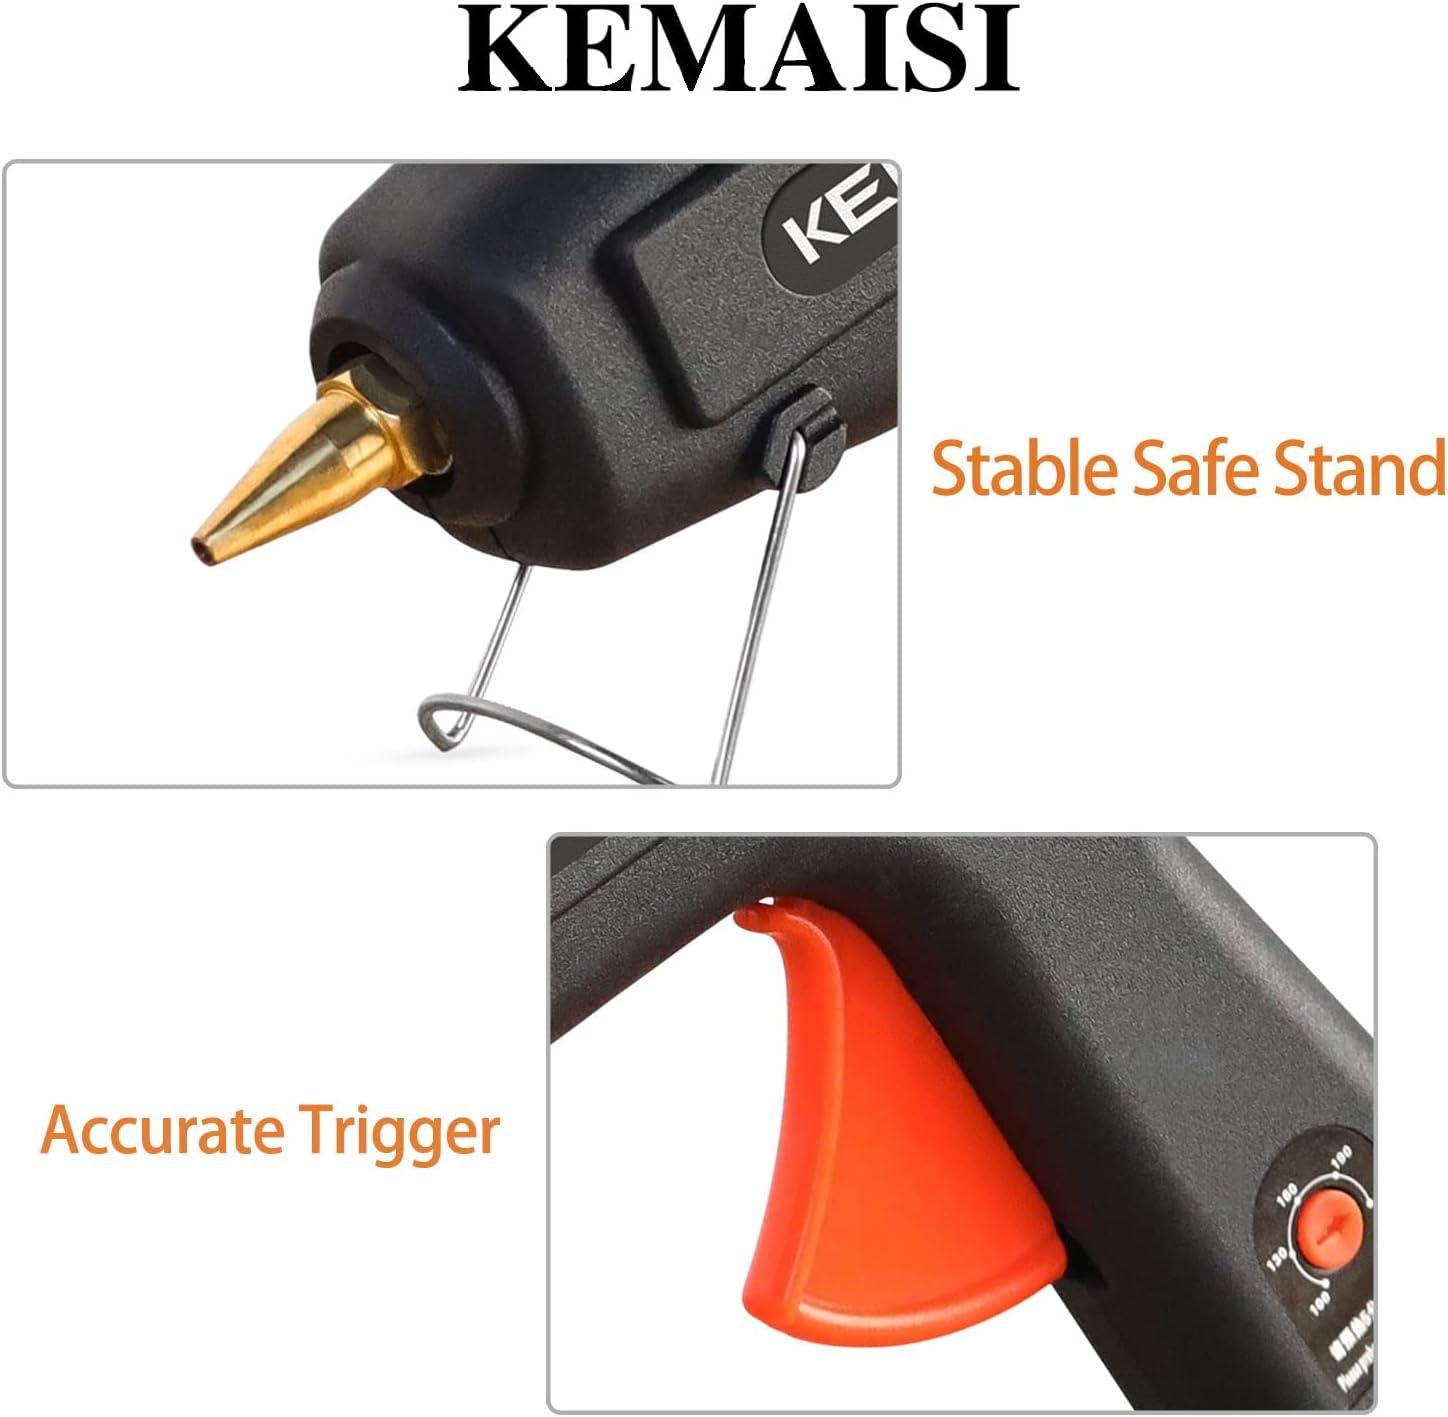 KEMAISI 100W Full Size hot glue gun kit with 30pcs Premium Hot Glue Sticks  Temperature Adjustable Heavy Duty Best Large Glue Gun for Crafts